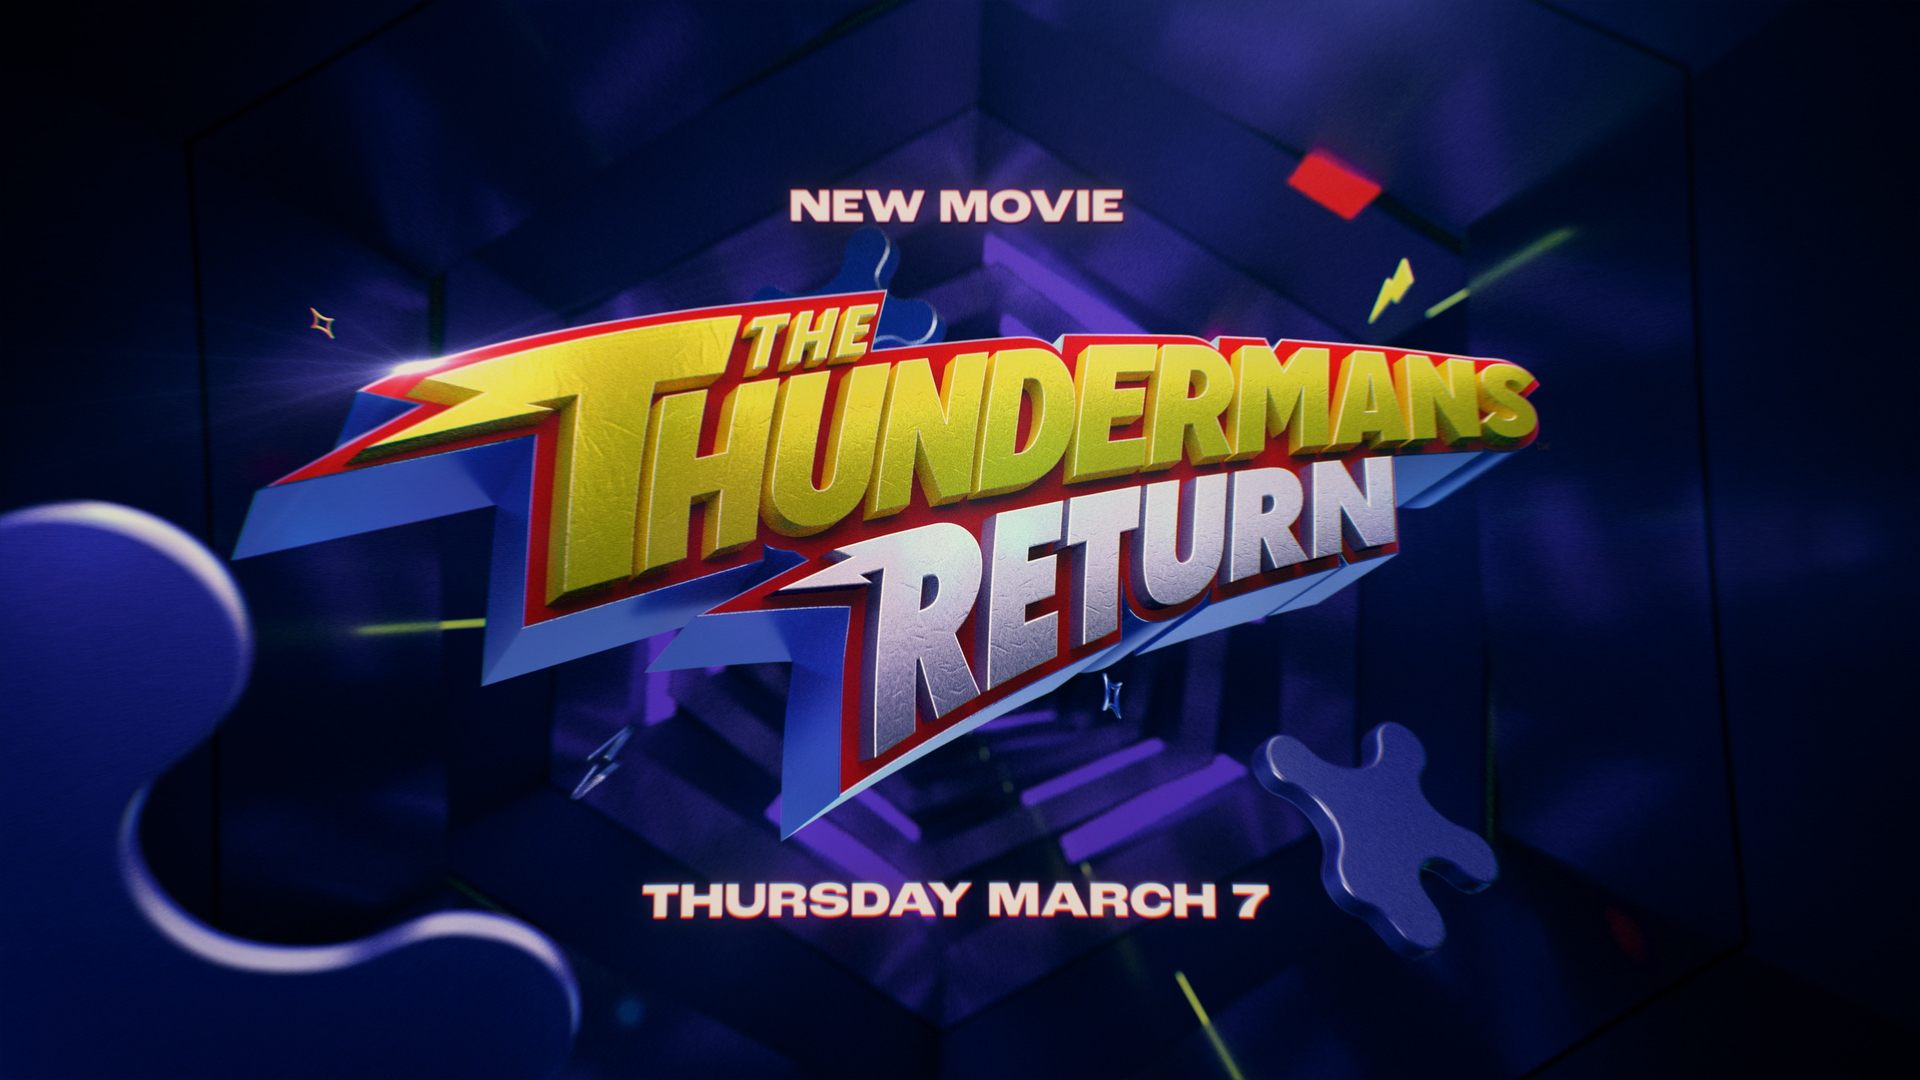 The Thundermans Return - Watch Movie Trailer on Paramount Plus